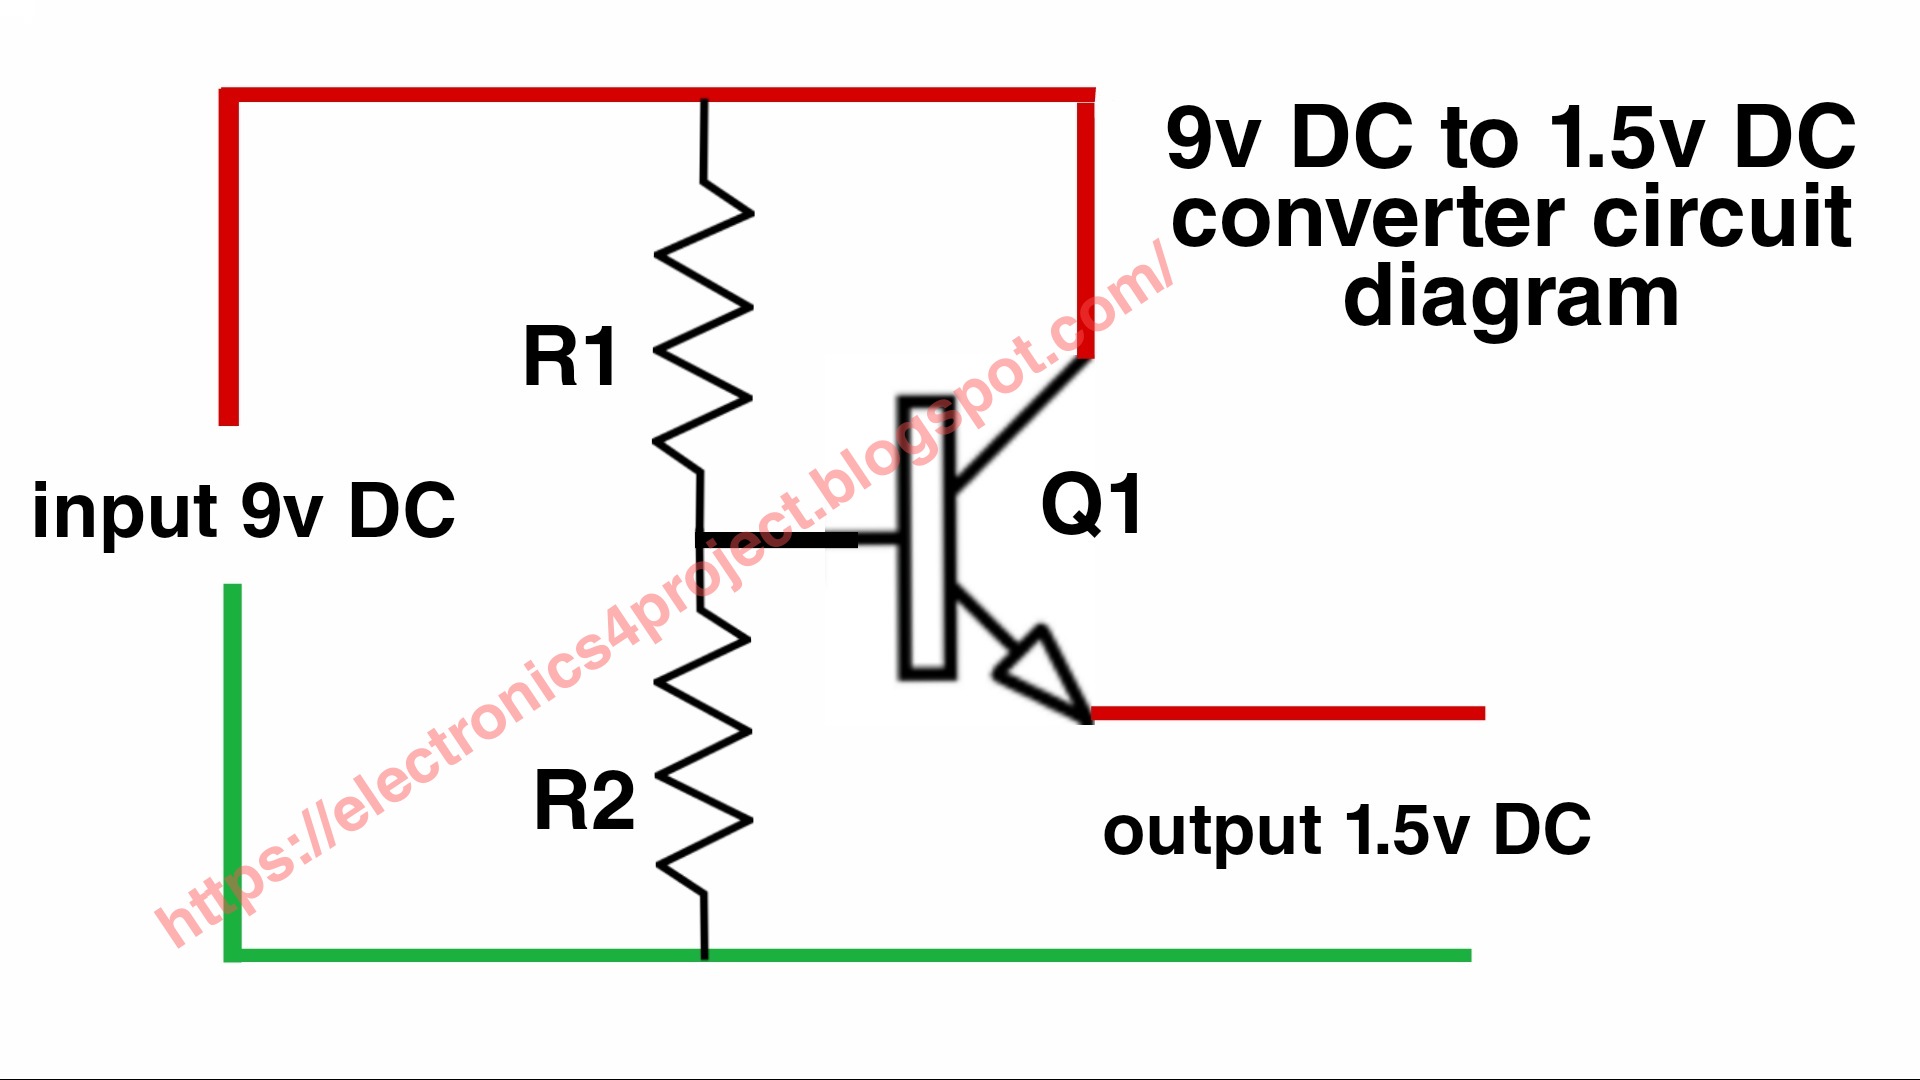 9v dc to 1.5v dc converter circuit diagram